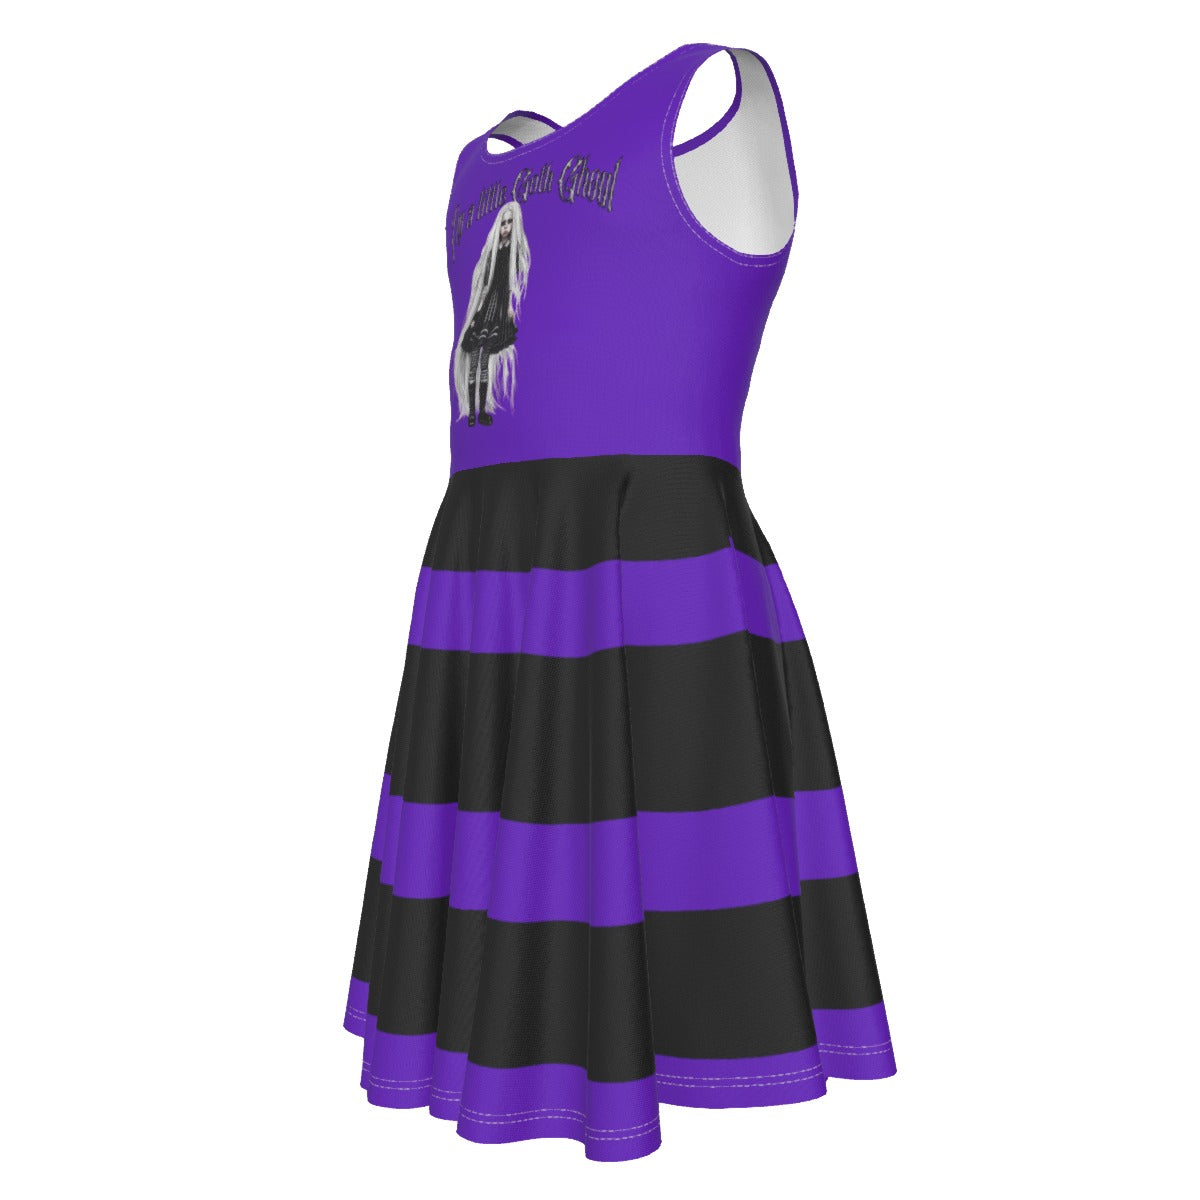 Kid's Purple and Black Gothic Wednesday Addam's Style Sleeveless Dress